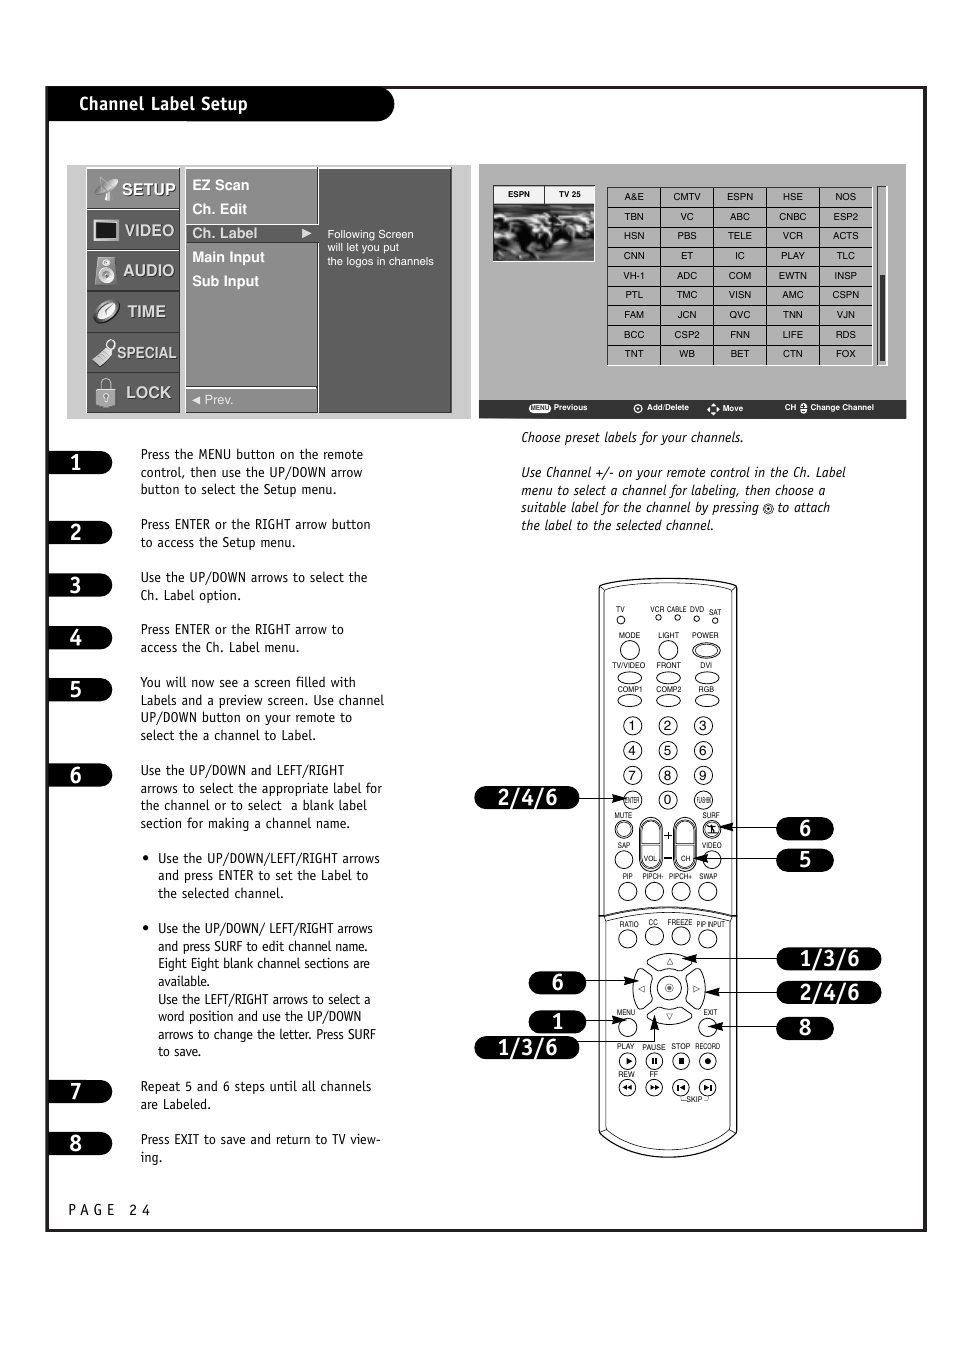 Channel label setup, Setup, Setup video video audio audio time time lock lock | Special | LG RU-52SZ61D User Manual | Page 24 / 60